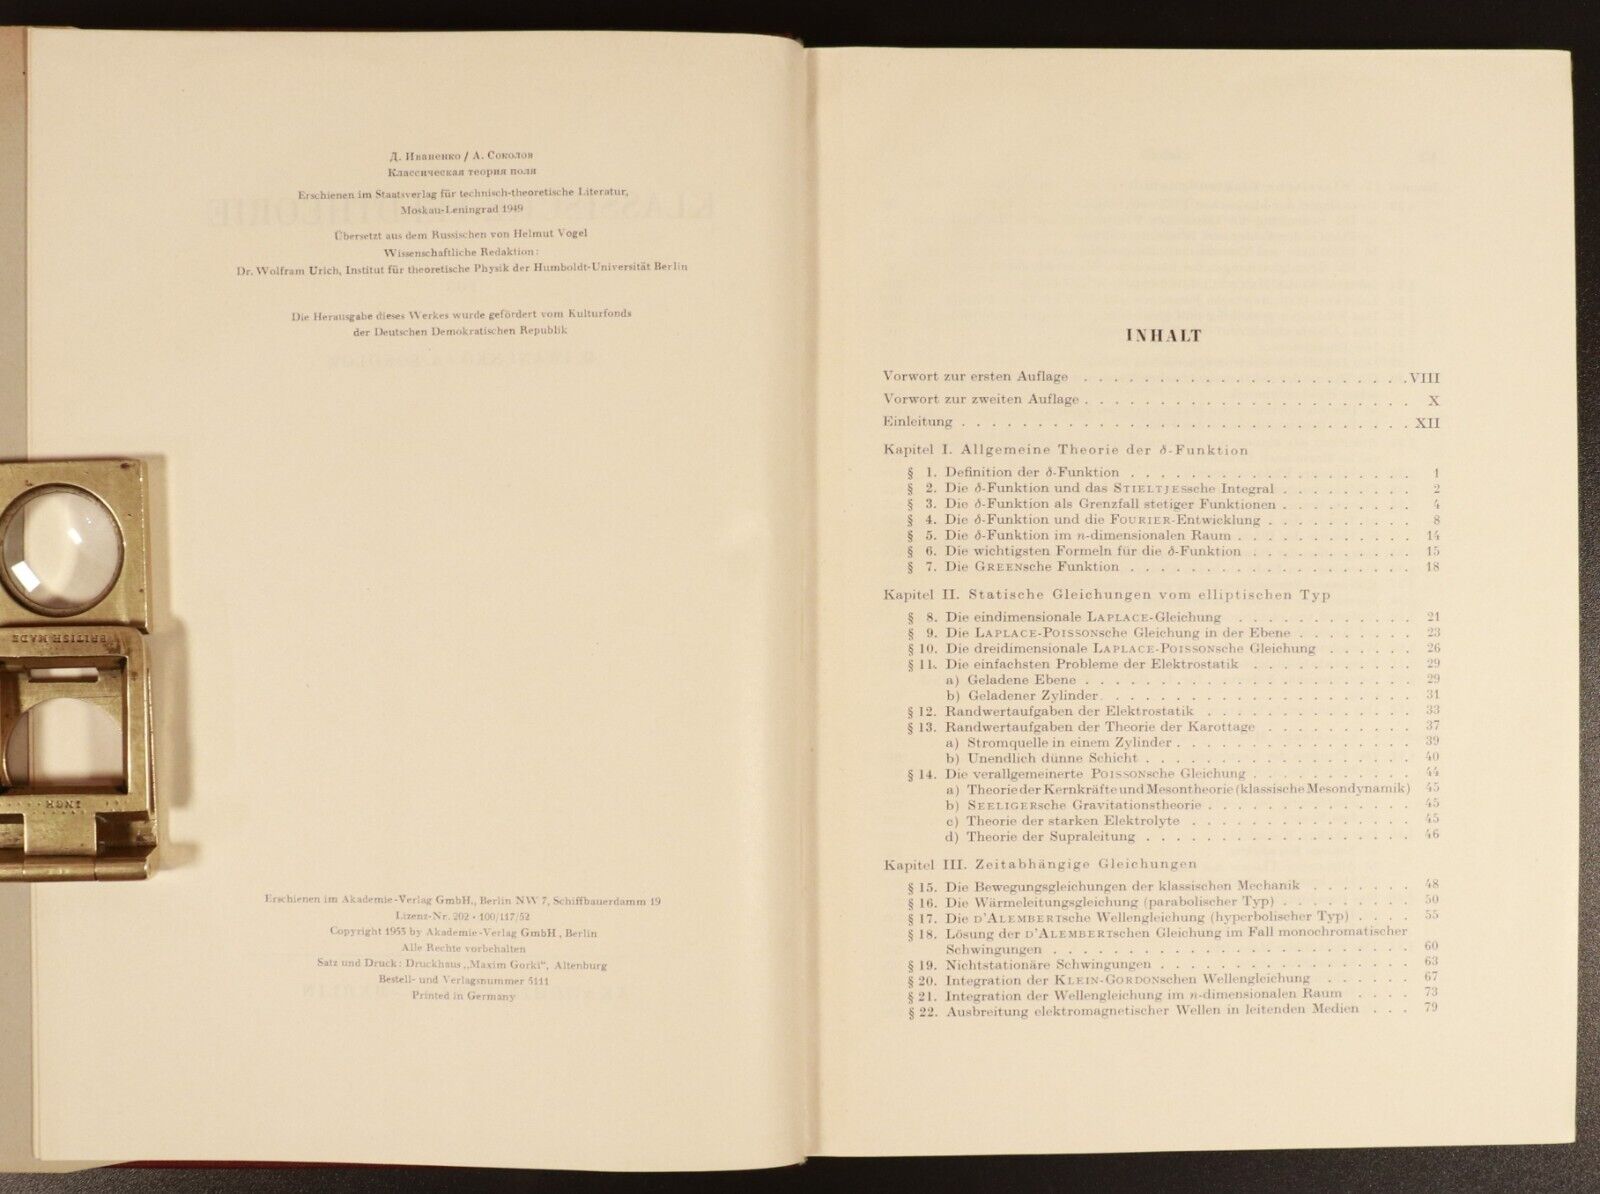 1953 Klassische Feldtheorie by D. Iwanenko & A. Sokolow Vintage Science Book